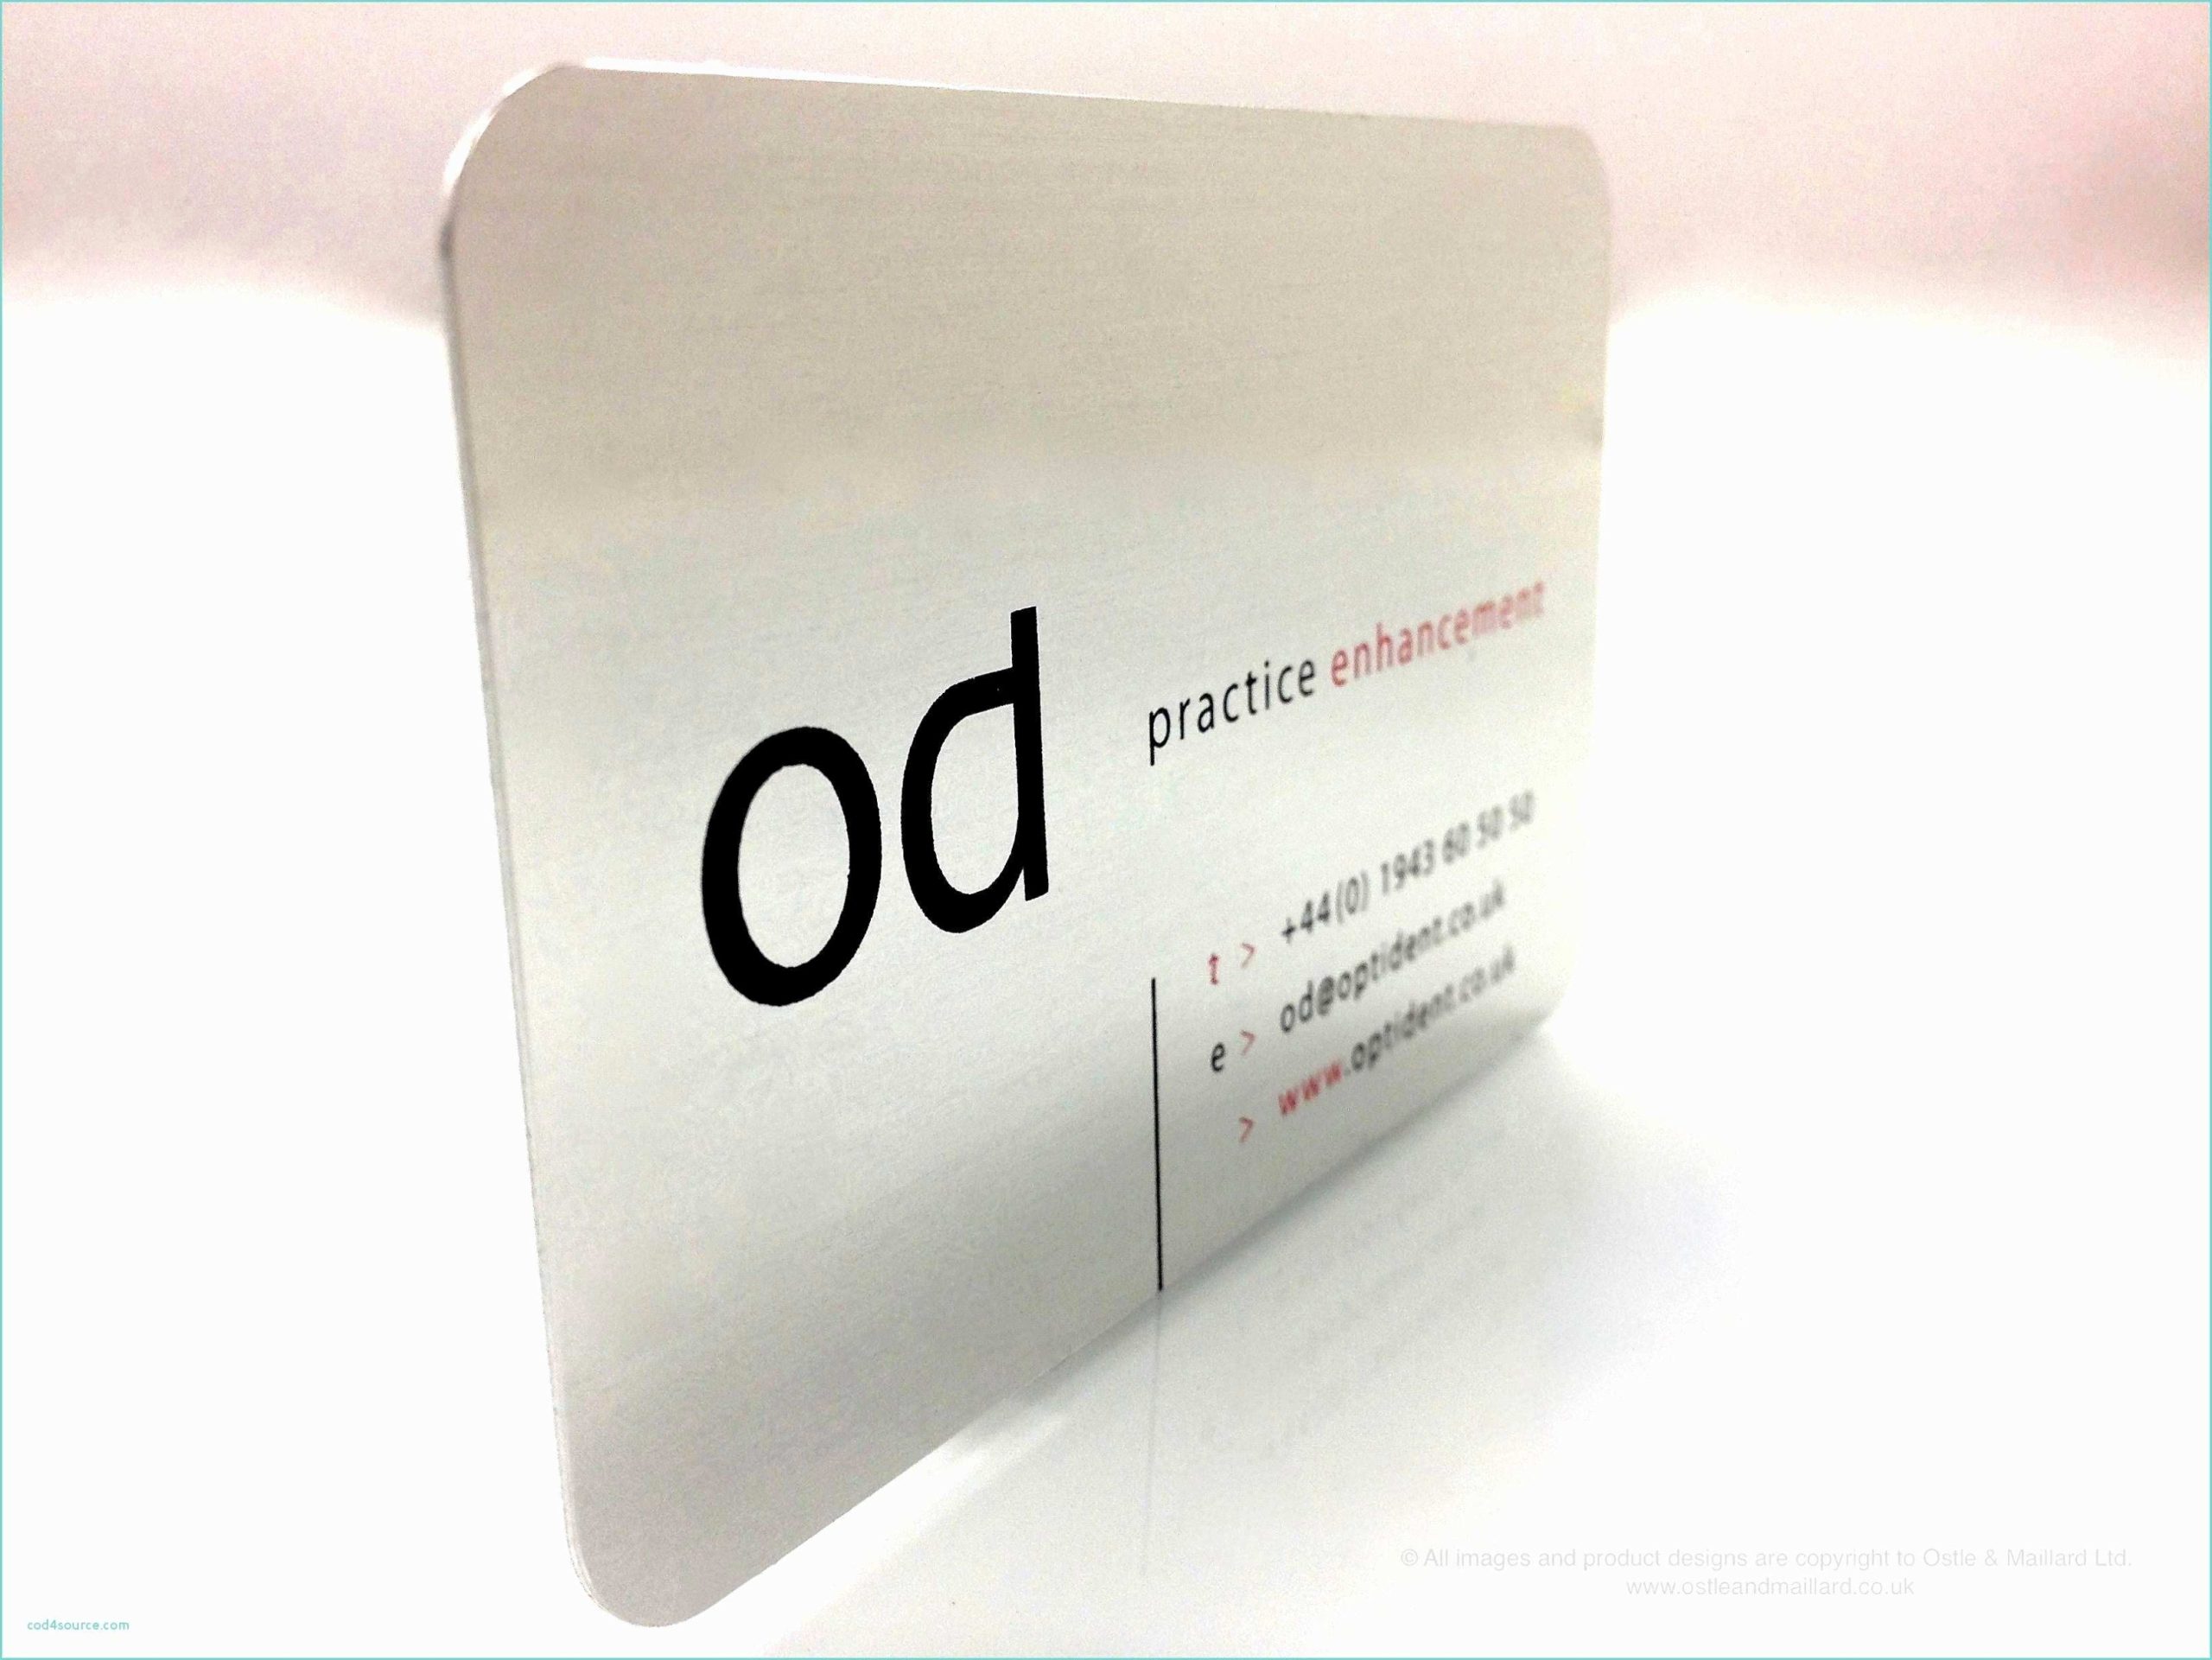 Gartner Place Card Template Word - Cards Design Templates throughout Gartner Business Cards Template